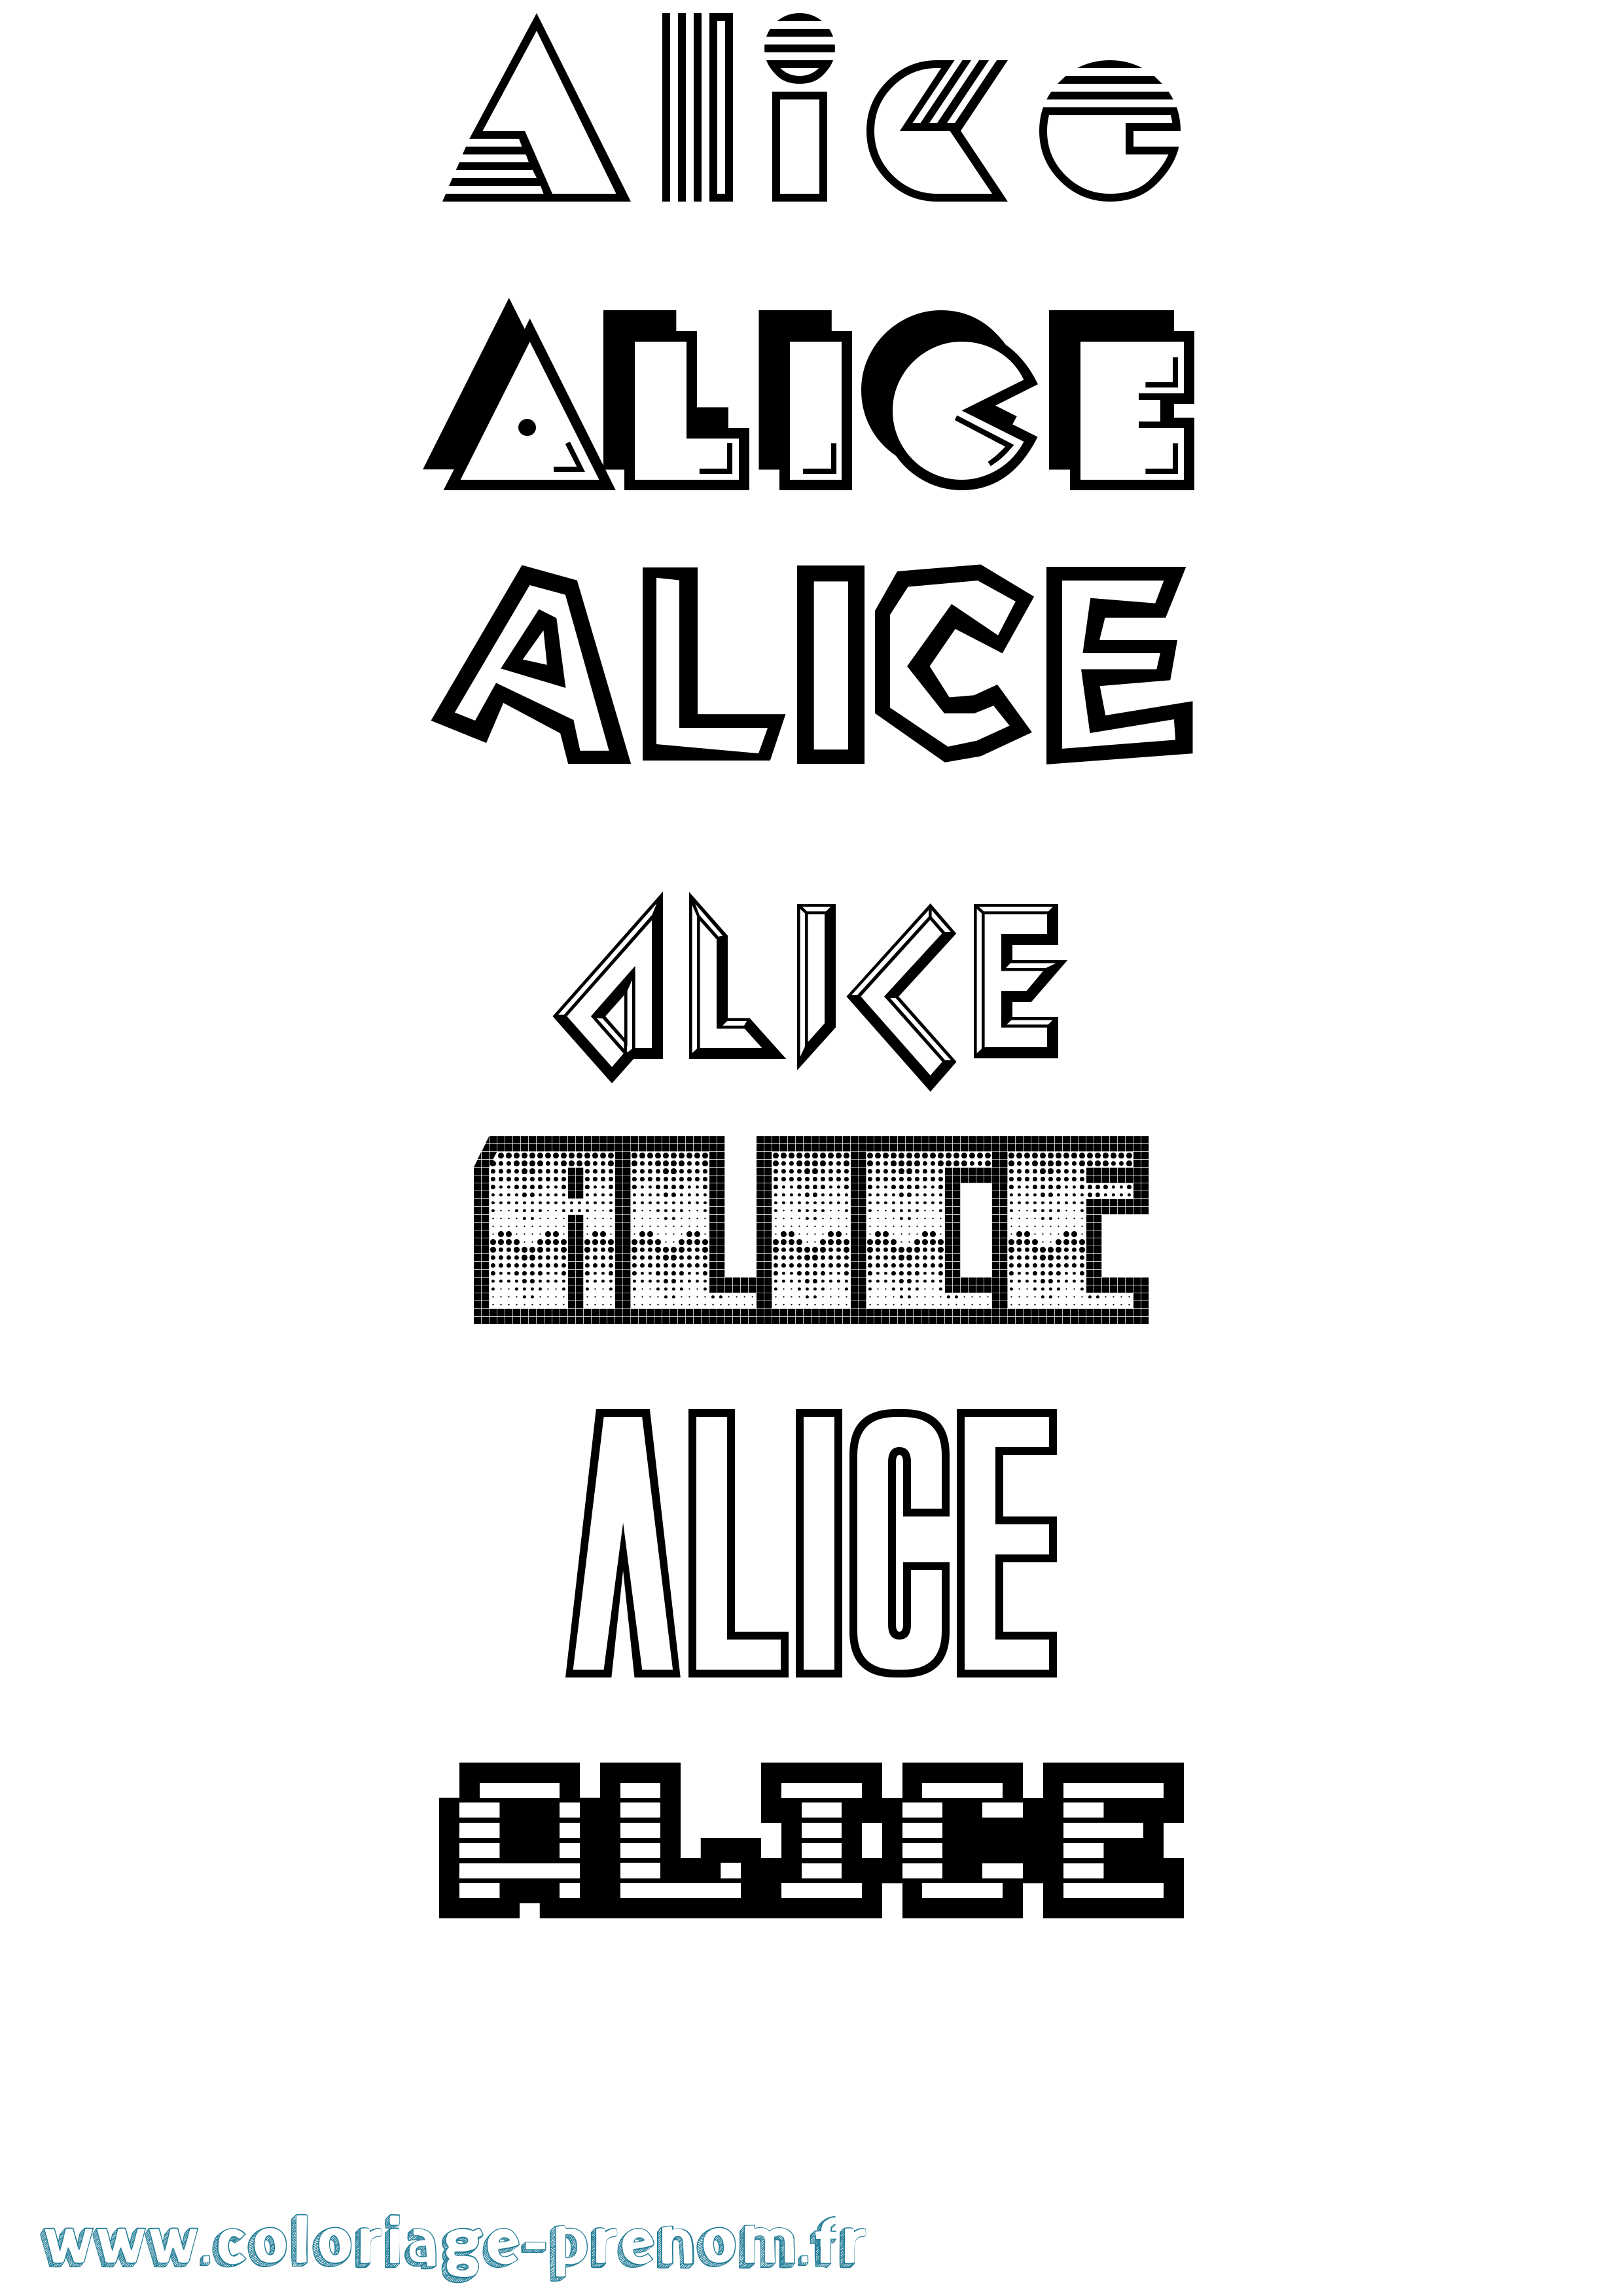 Coloriage prénom Alice Jeux Vidéos